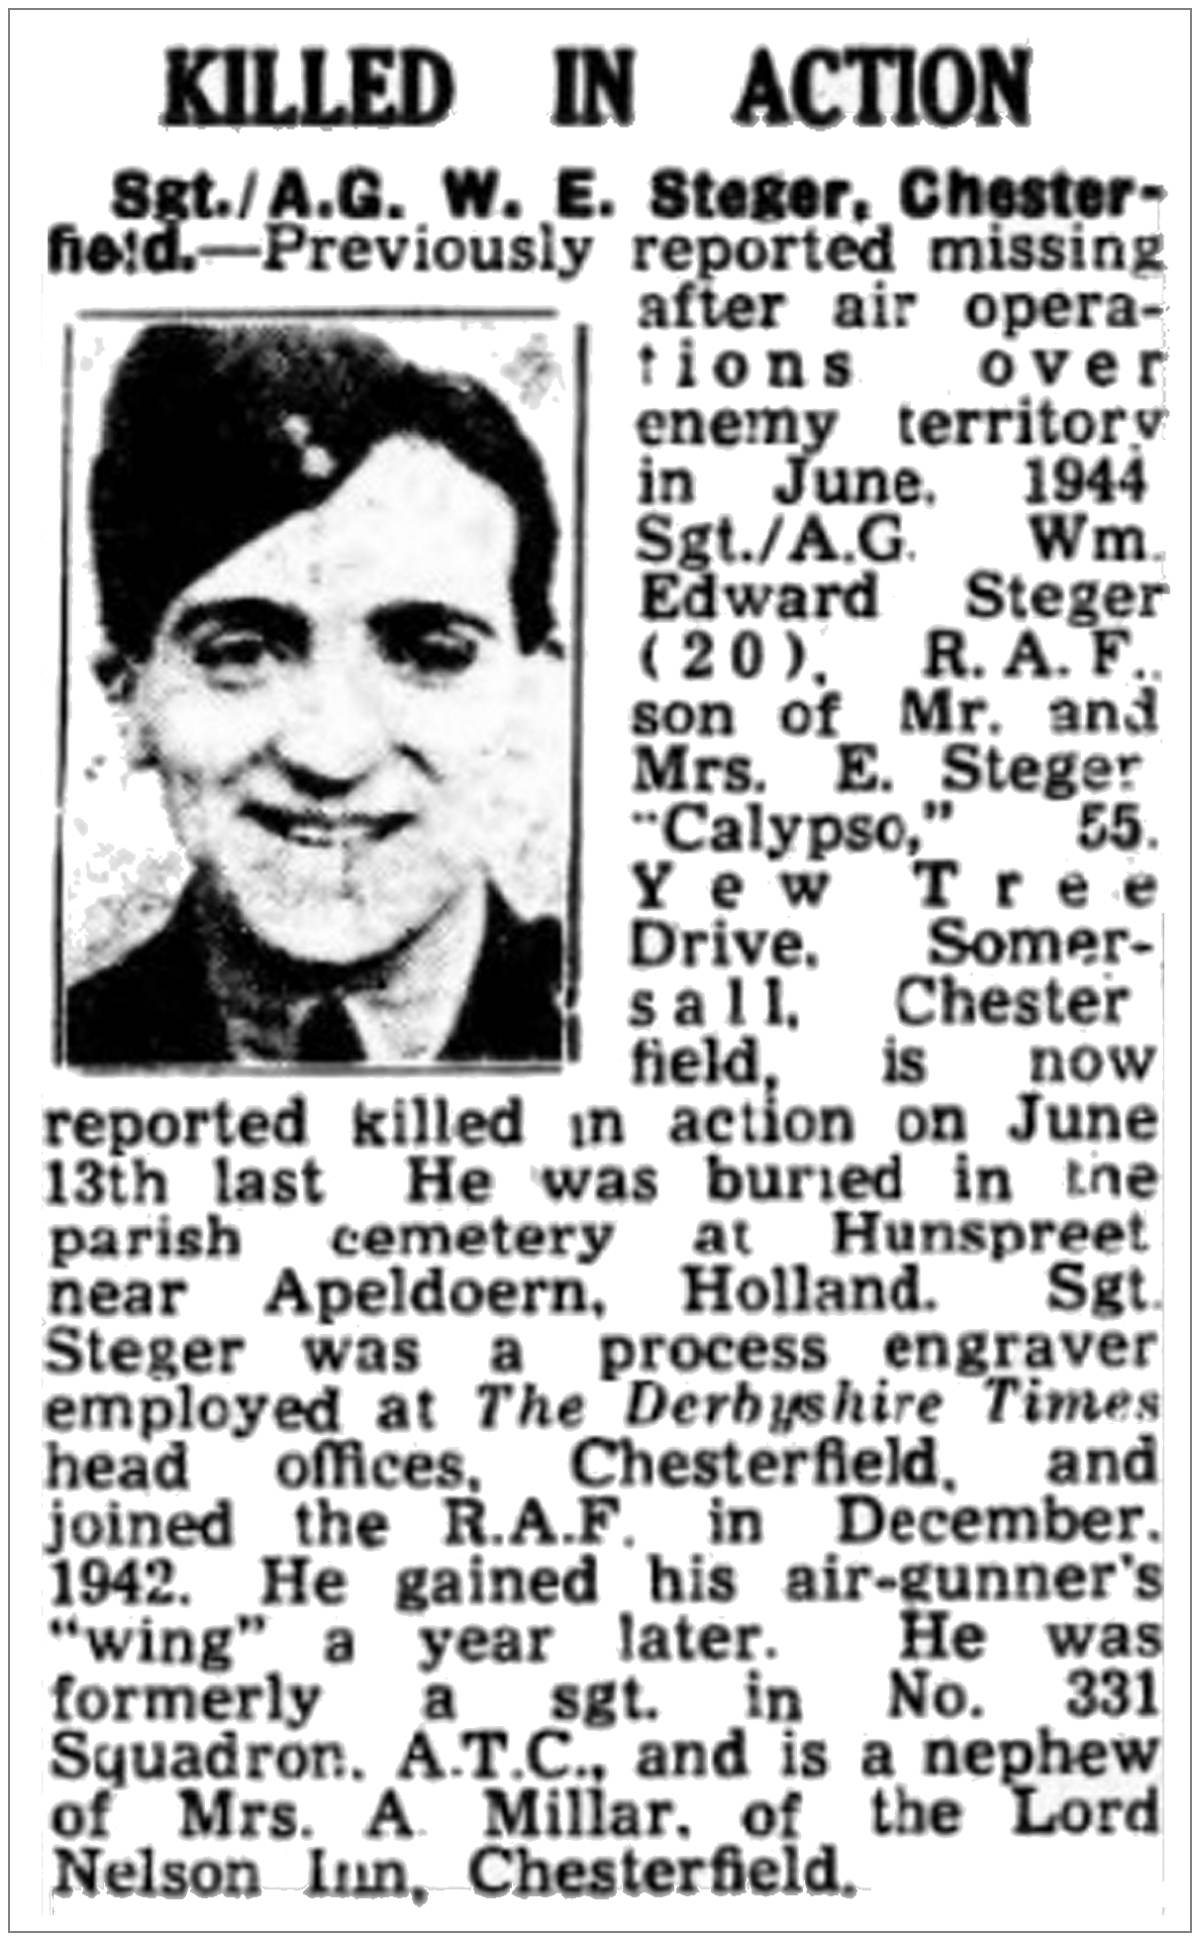 Sergeant William Edward Steger, Chesterfield, UK